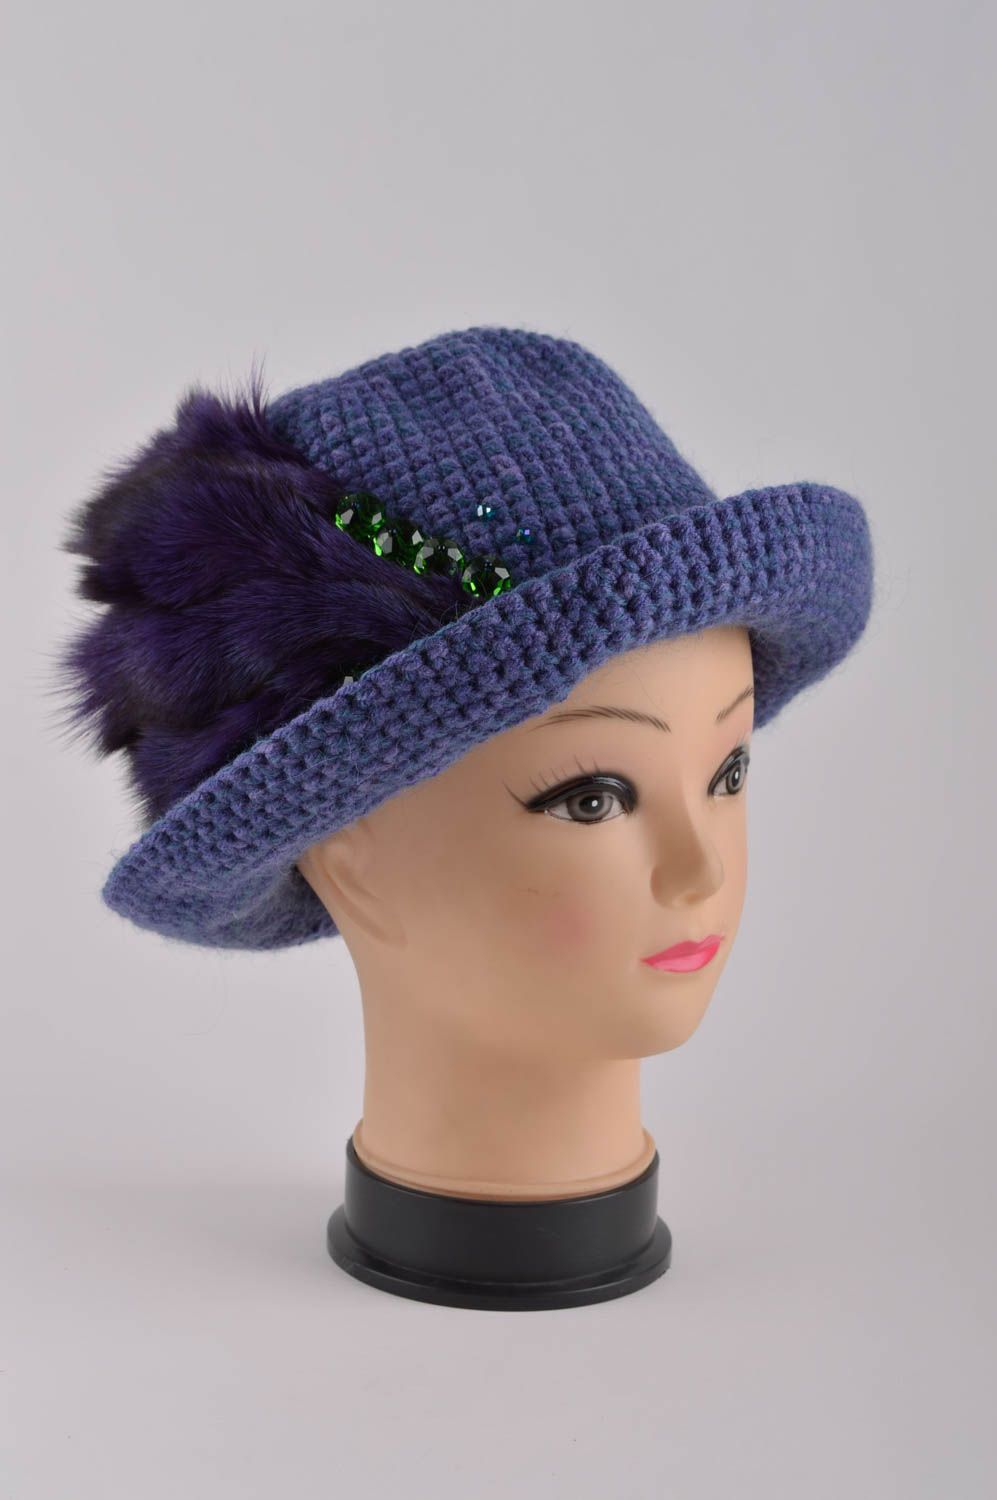 Handmade designer hat ladies hat crochet hat fashion accessories gifts for women photo 2